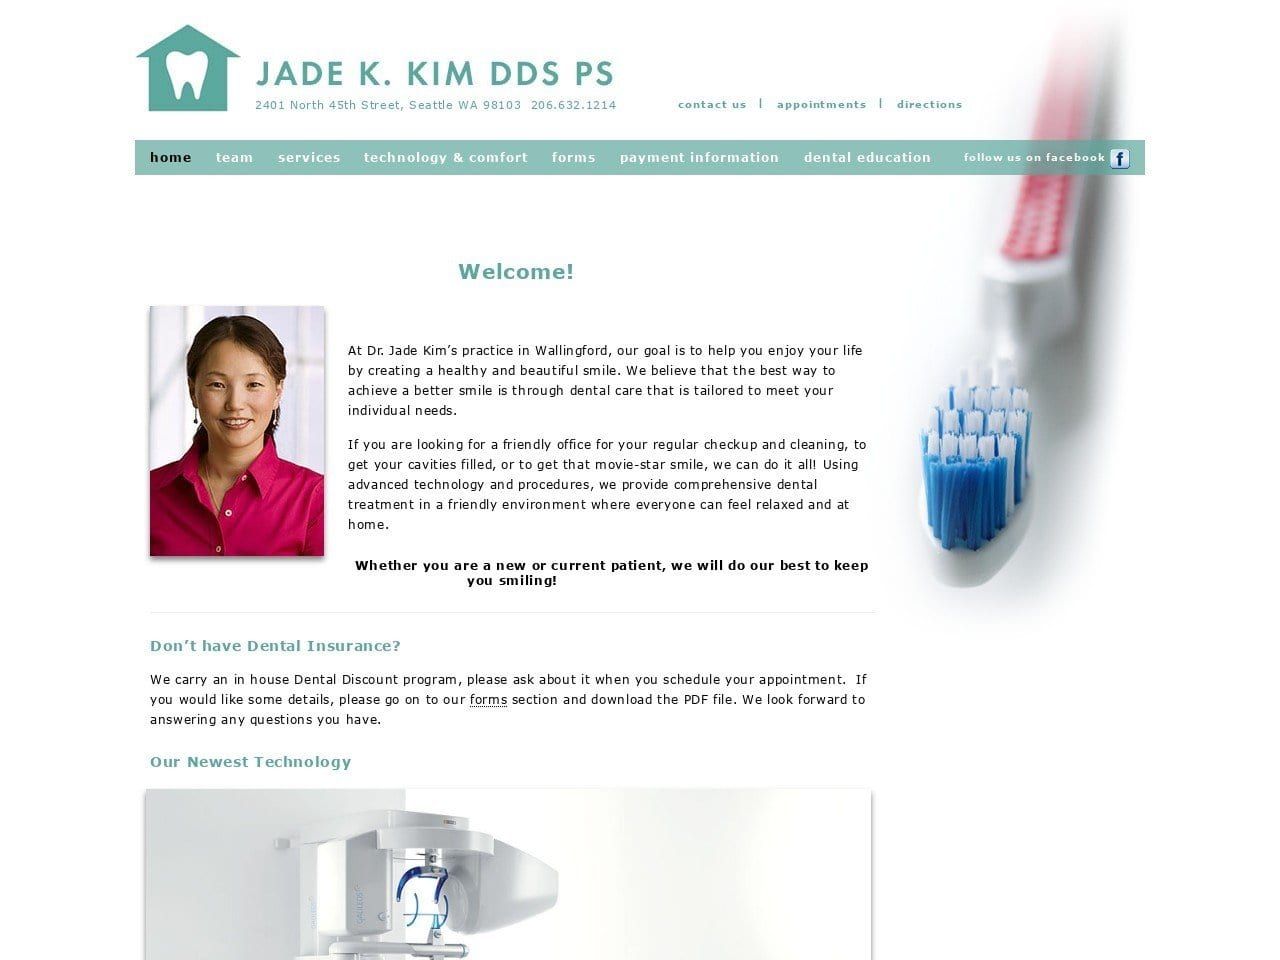 Jade K Kim DDS Website Screenshot from jadekimdds.com